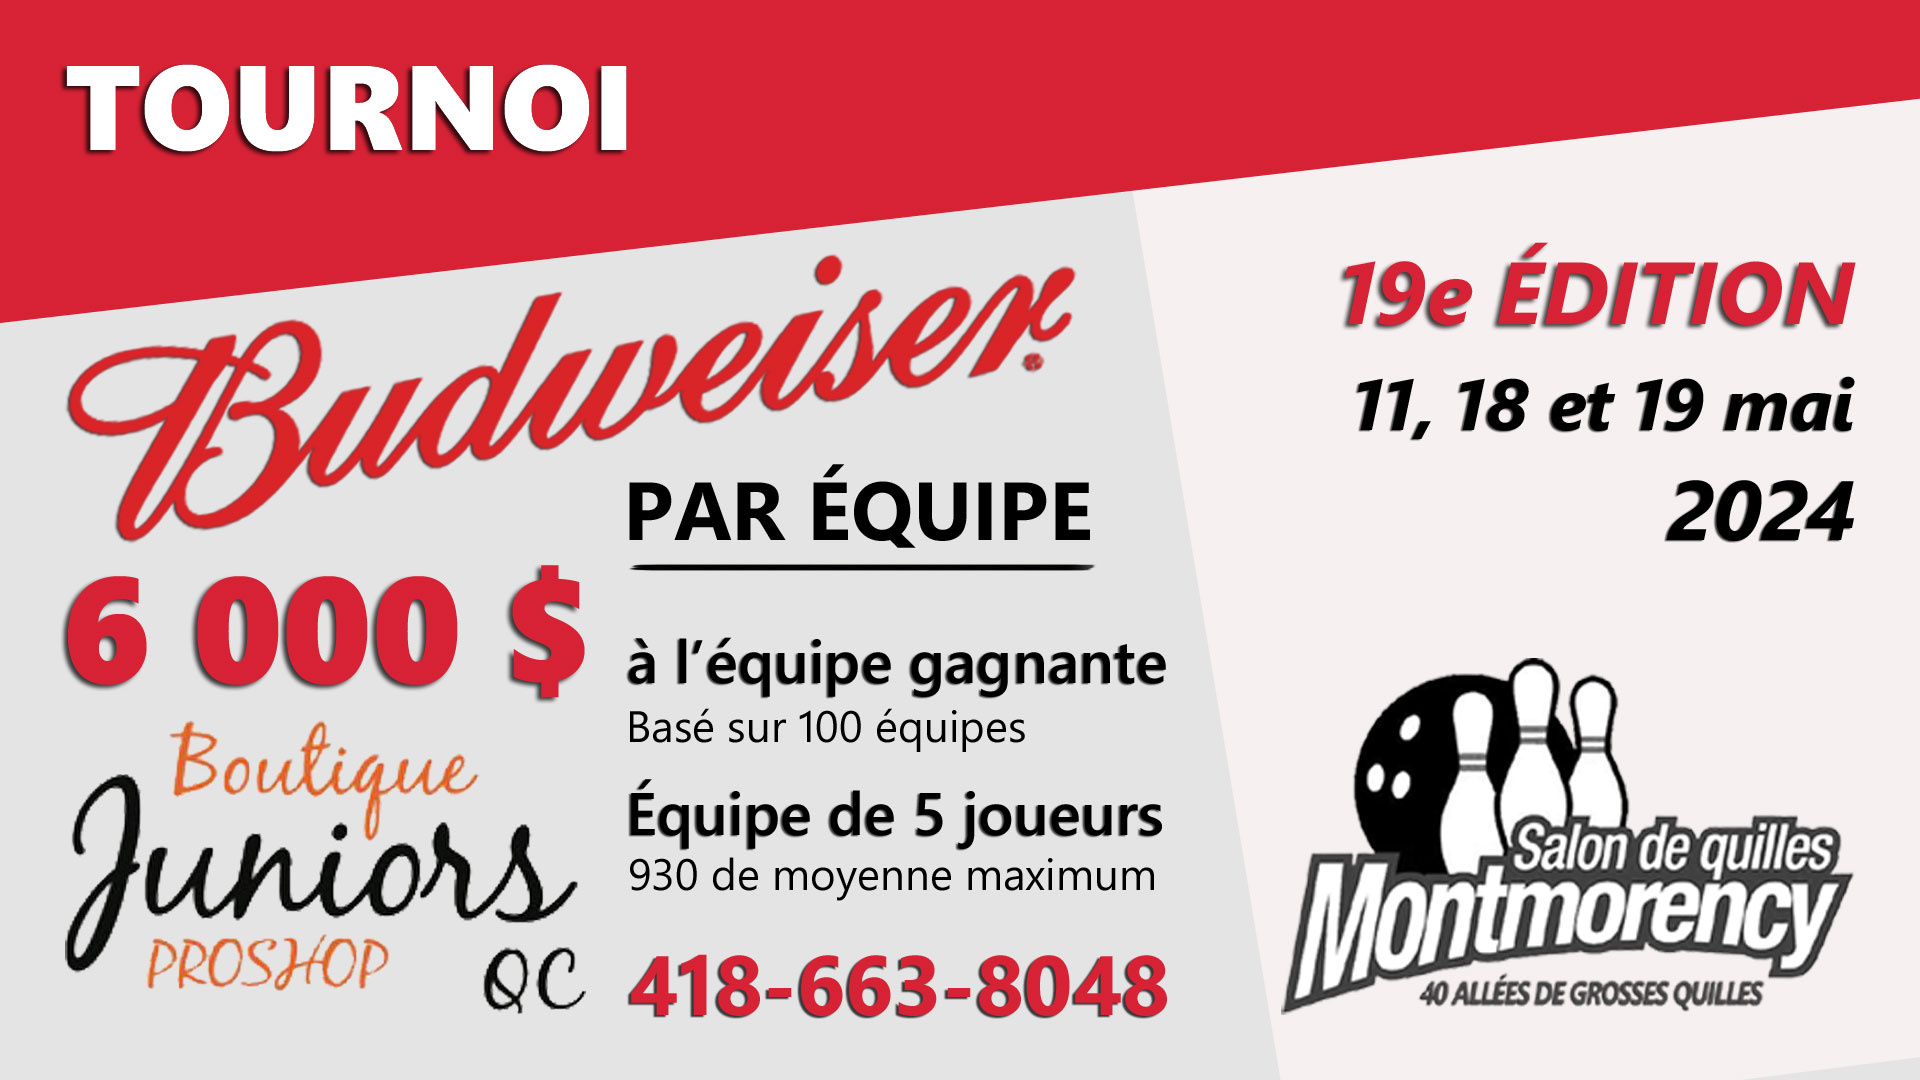 Tournoi Budweiser 2024 Quilles Montmorency